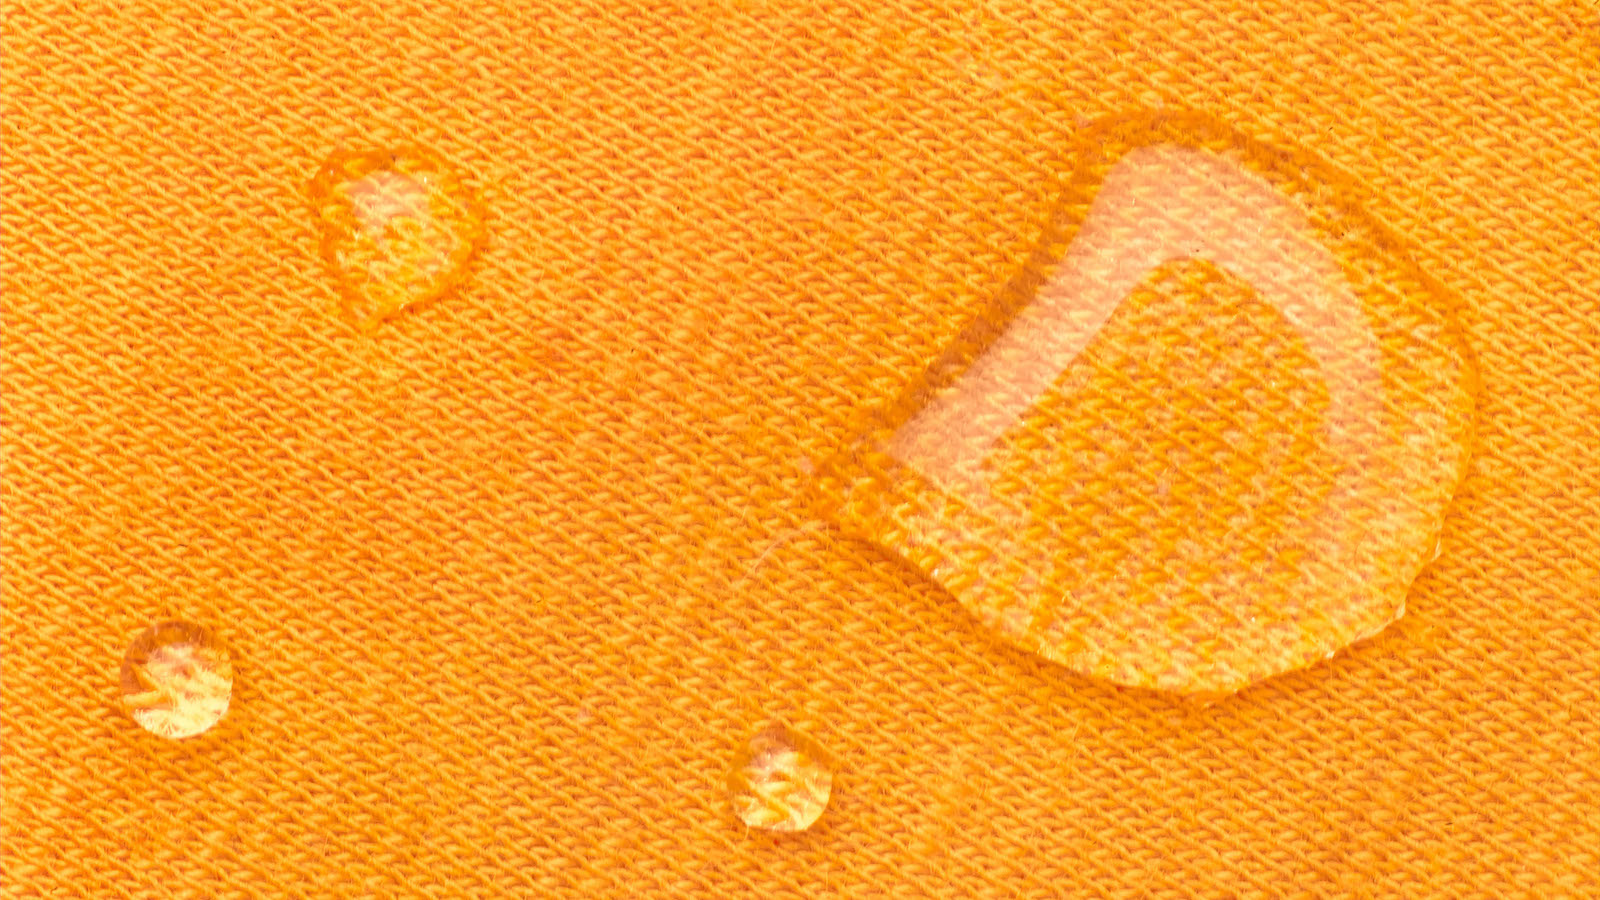 Water droplets on orange fabric